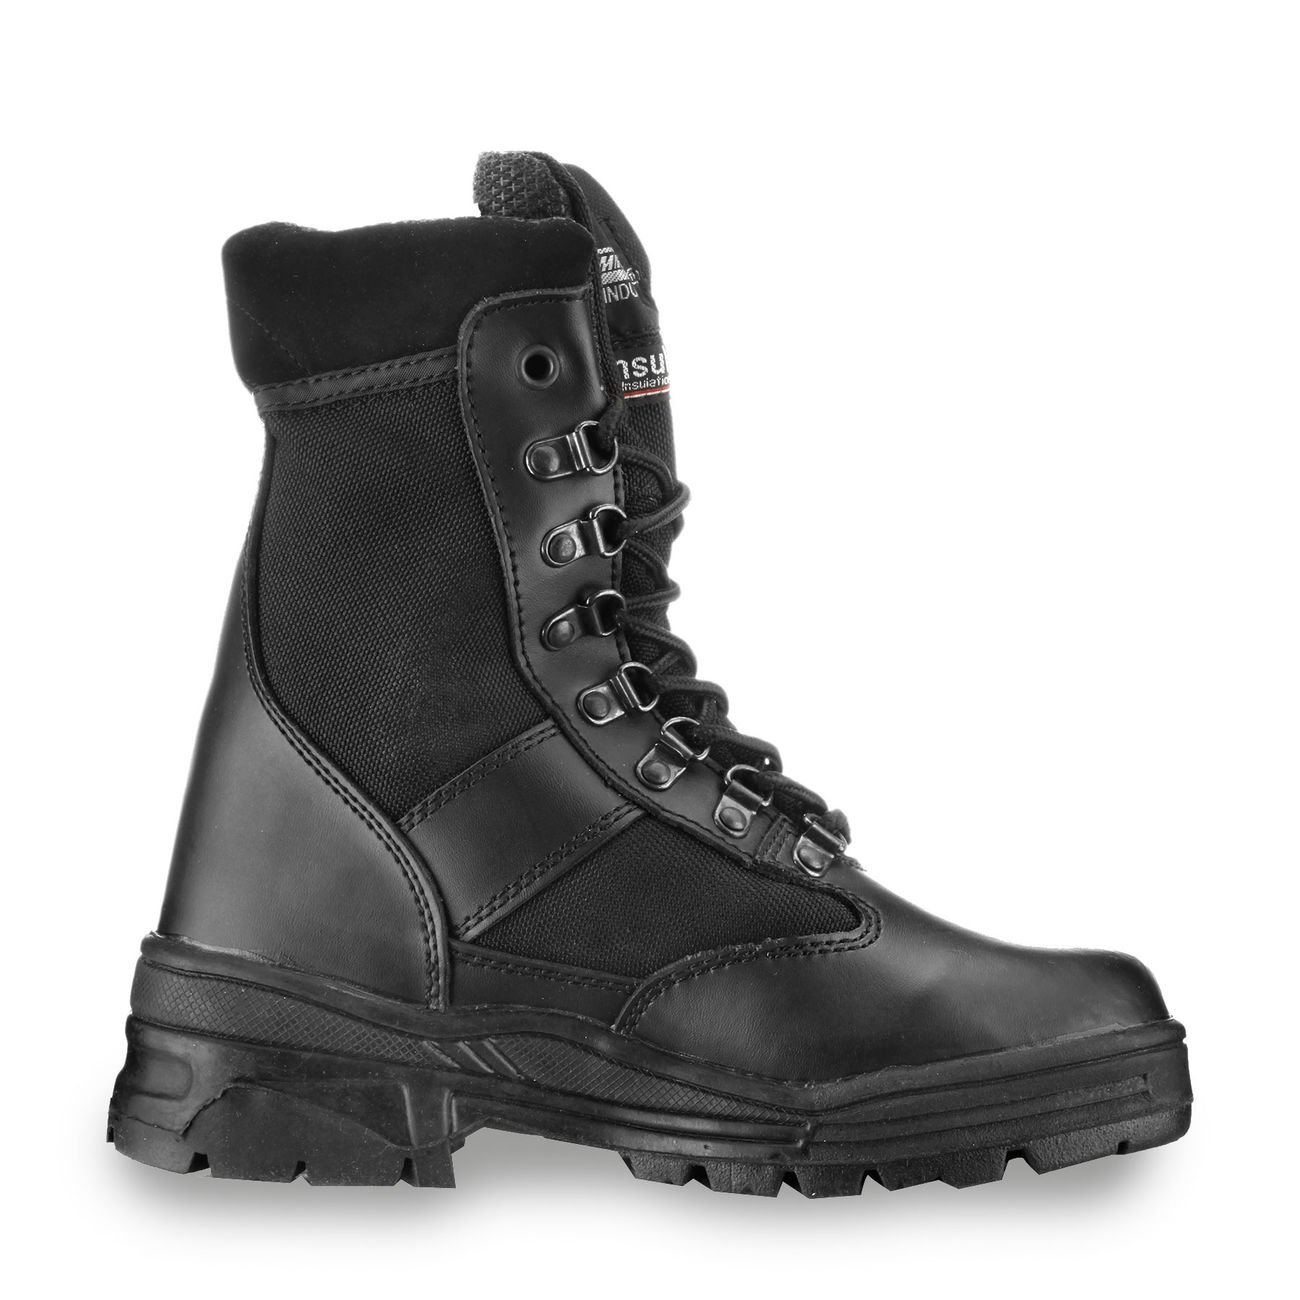 Tactical Boots TB-4 Stiefel, schwarz Bild 1